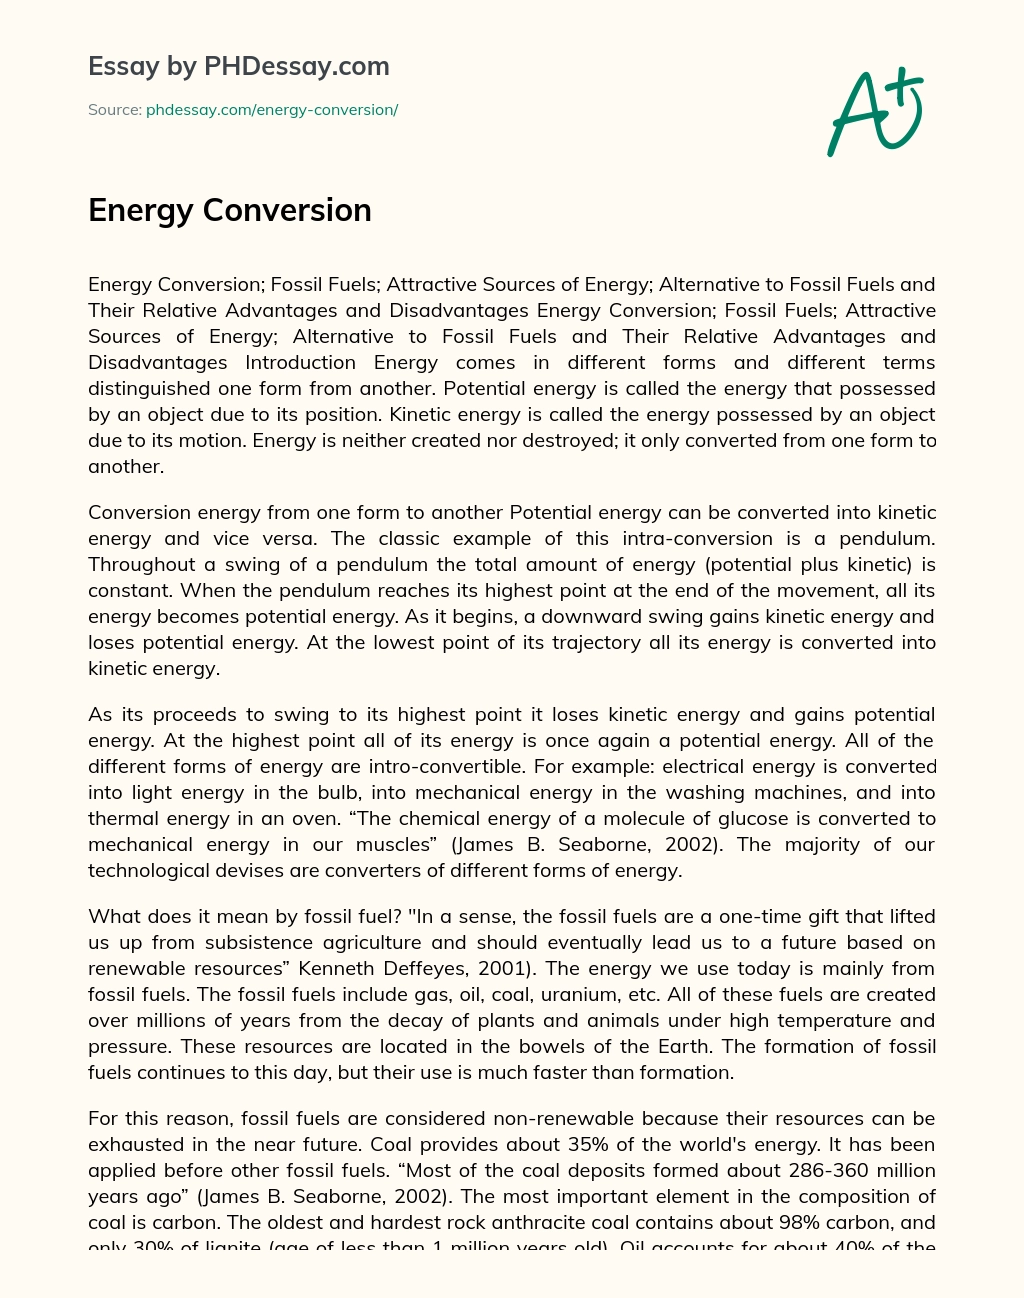 Energy Conversion essay